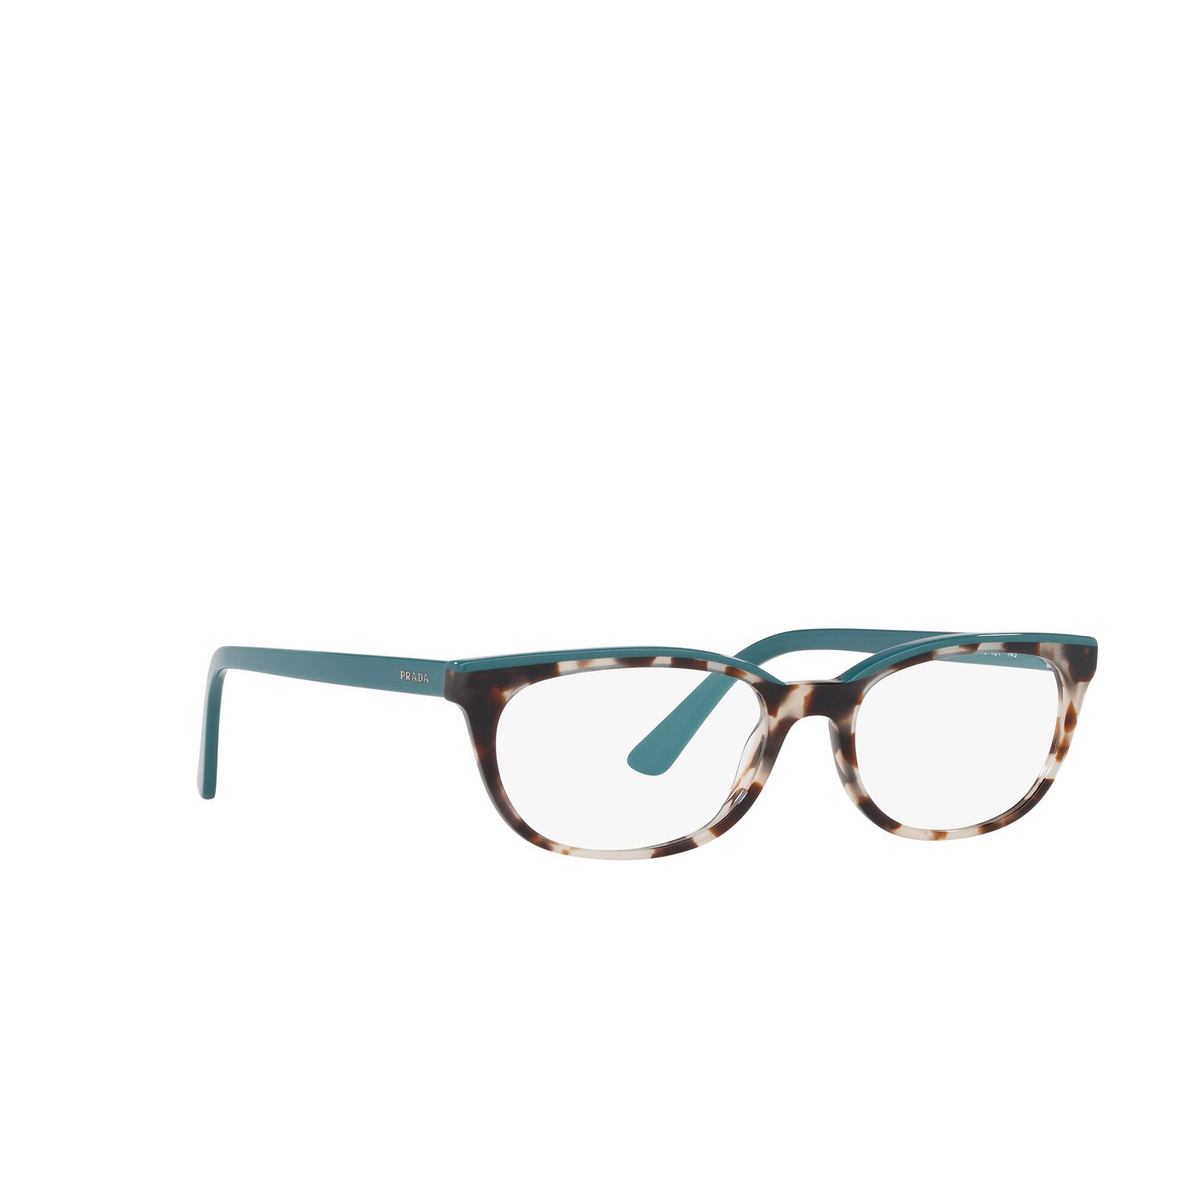 Prada® Oval Eyeglasses: Catwalk PR 13VV color Spotted Brown 4751O1 - three-quarters view.